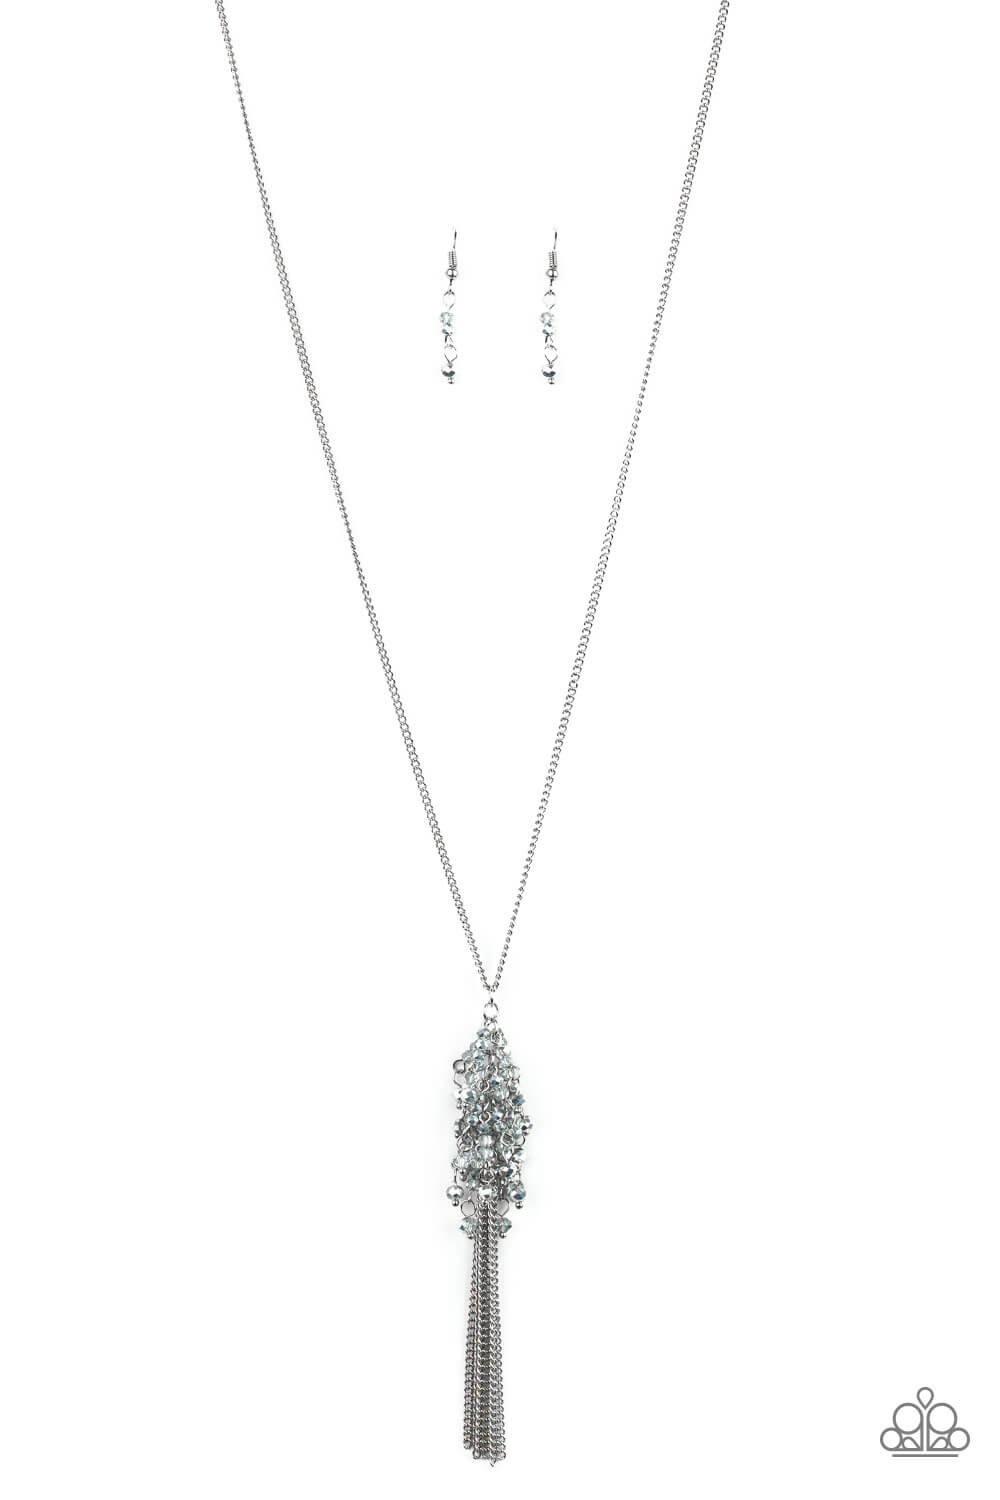 Twilight Twinkle - Silver Necklace Set - Princess Glam Shop